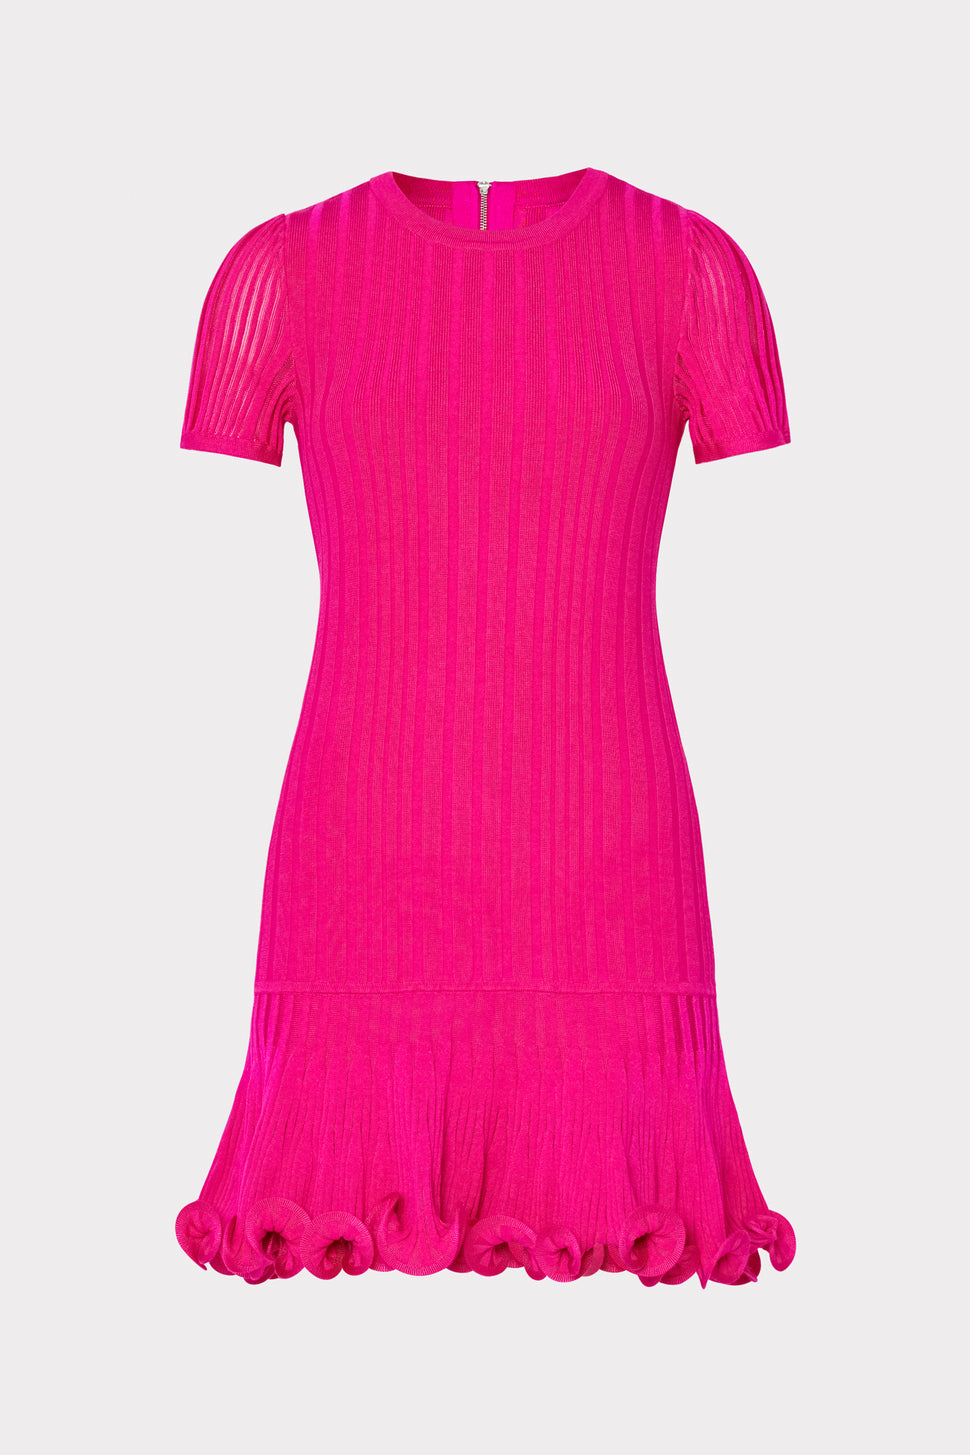 Women's Short Sleeve Pink Knit Mini Dress | MILLY